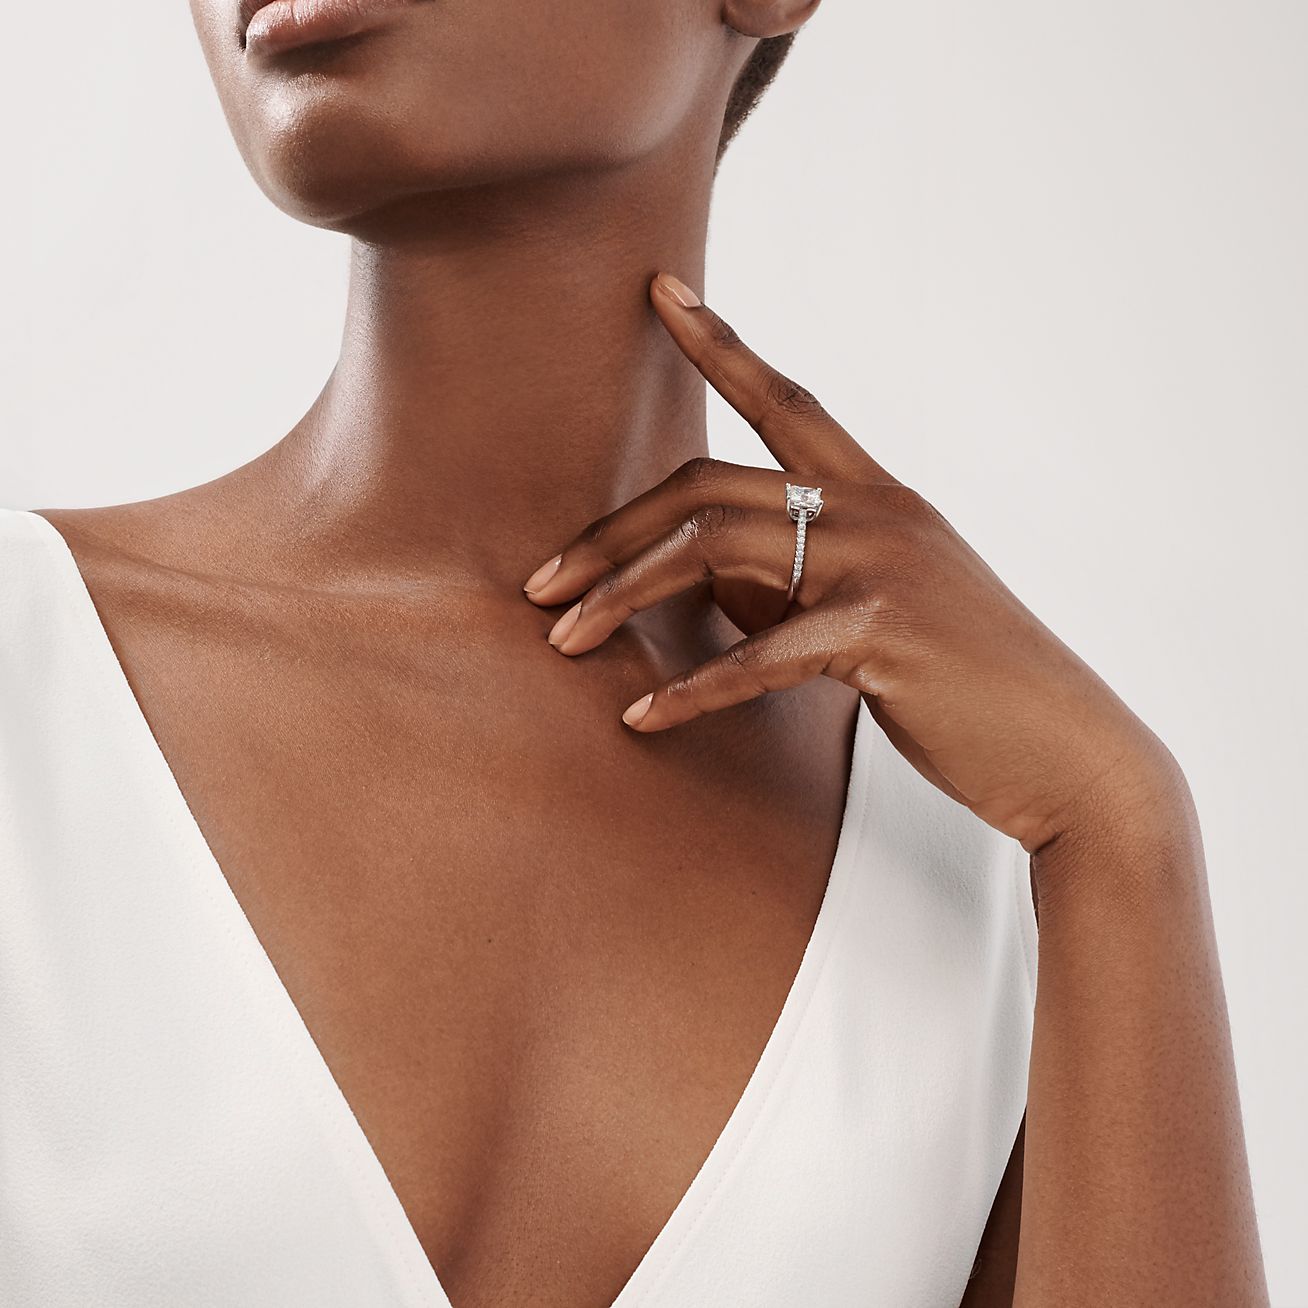 Tiffany Novo® Princess-cut Engagement Ring with a Pavé-set Diamond